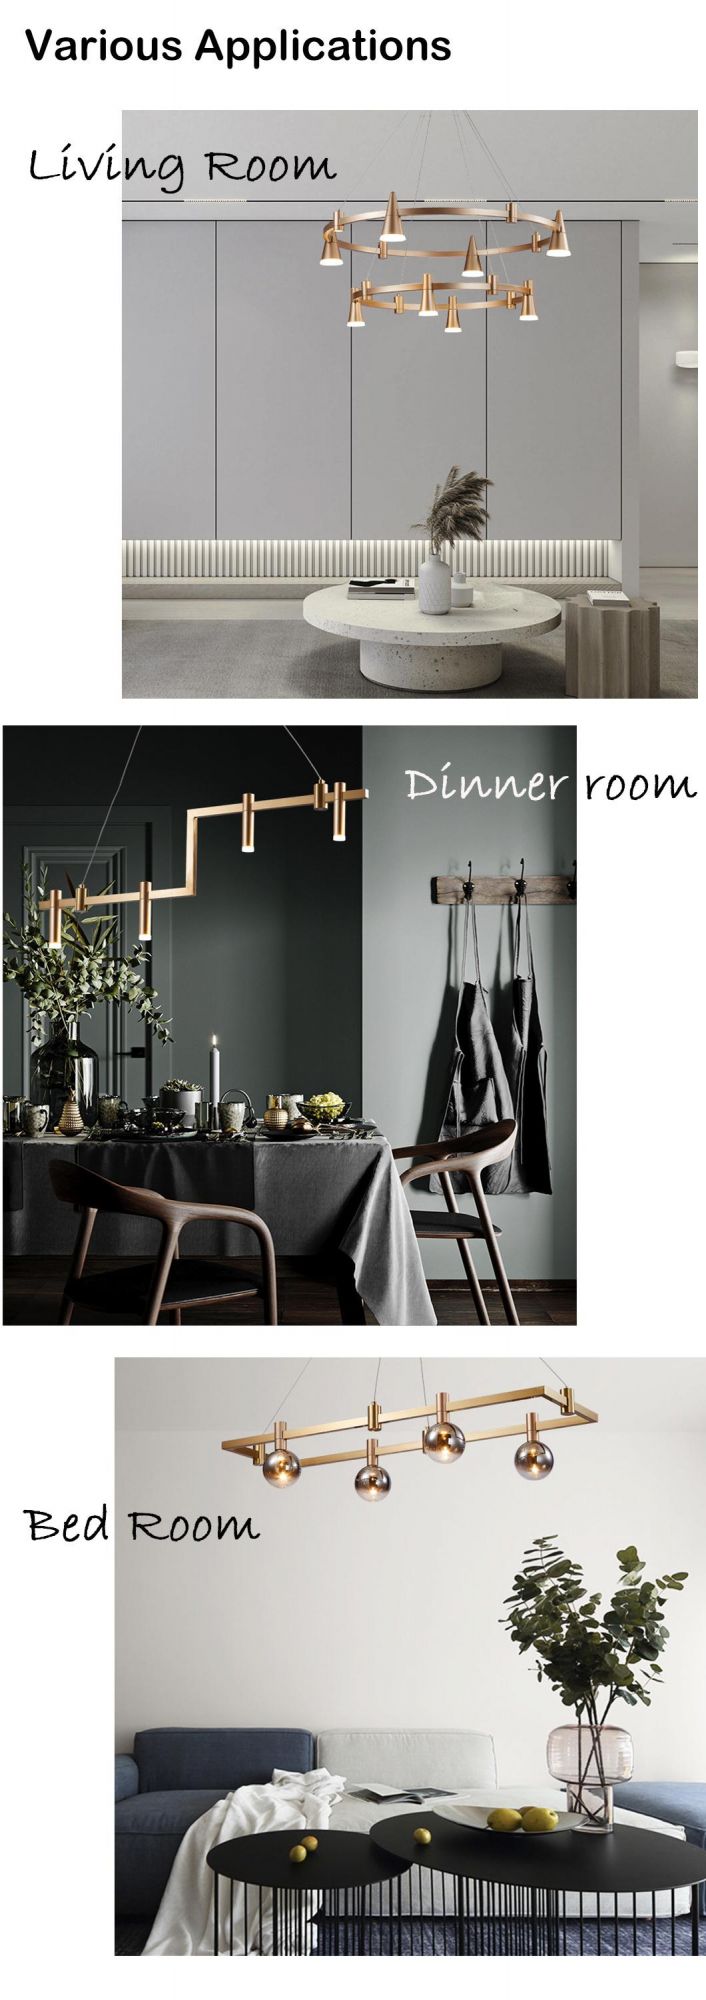 Gold Hot Sales Euro CE ETL Certification LED Chandelier for Living Room, Home, Villa and Hotel Amazing Decoration Modern Pendant